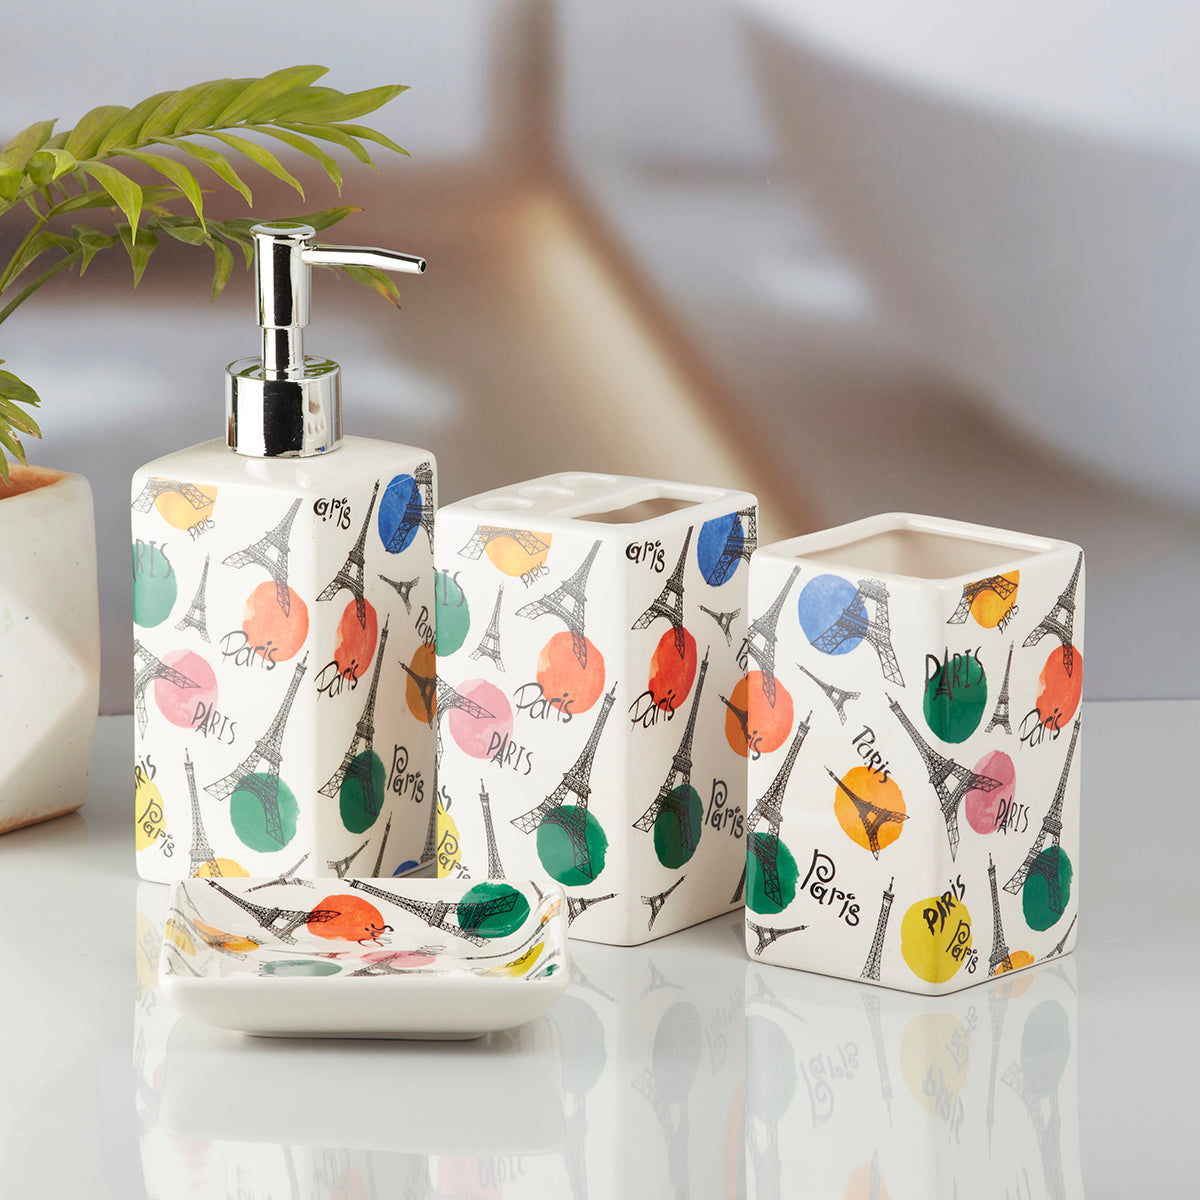 Ceramic Bathroom Accessories Set of 4 Bath Set with Soap Dispenser (10189)